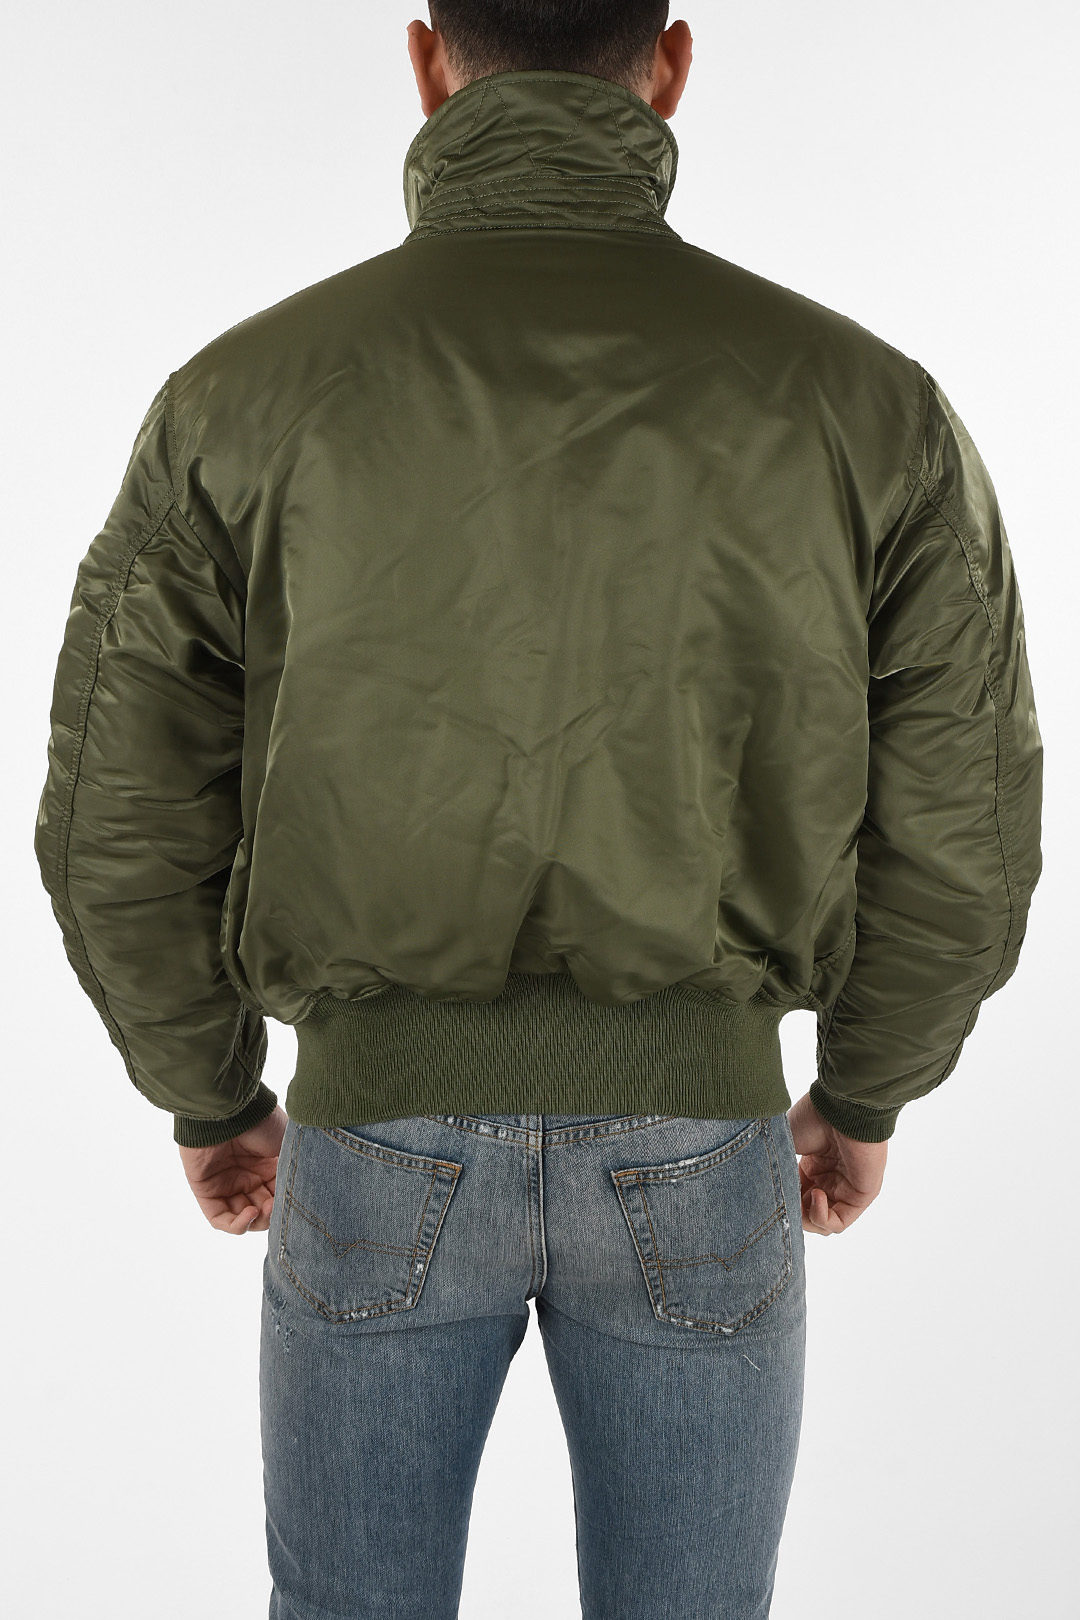 Alpha Industries full zip utility fatigue jacket men - Glamood Outlet